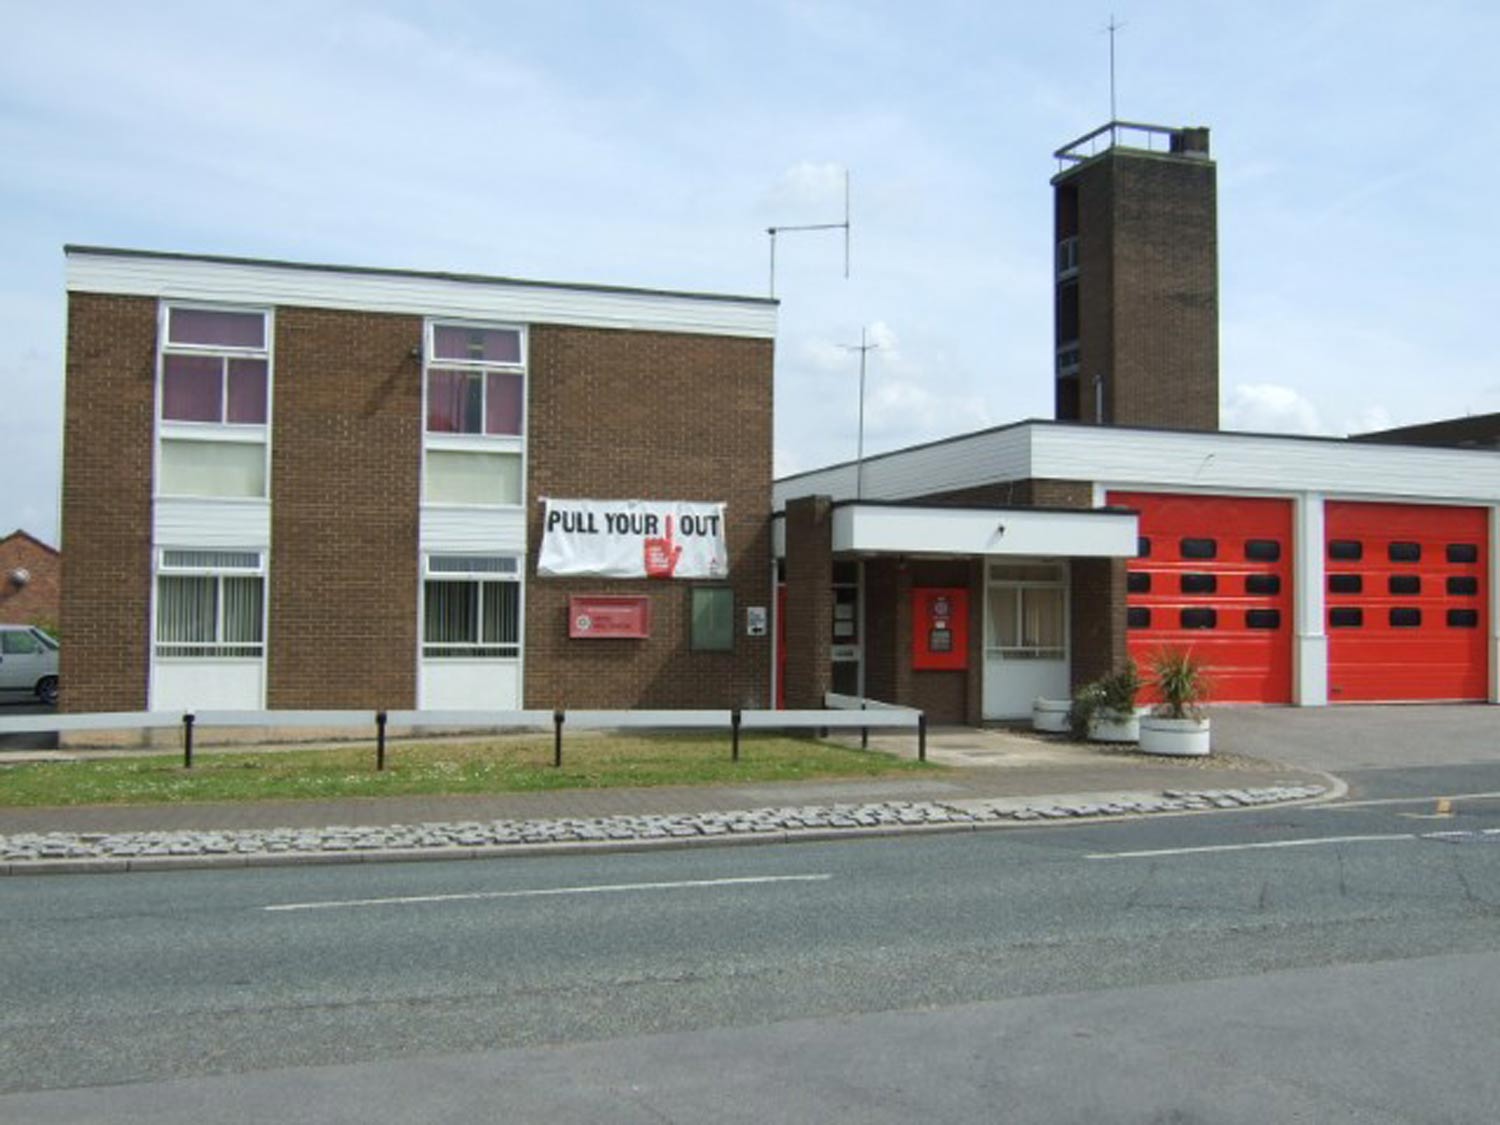 Ripon Fire Station